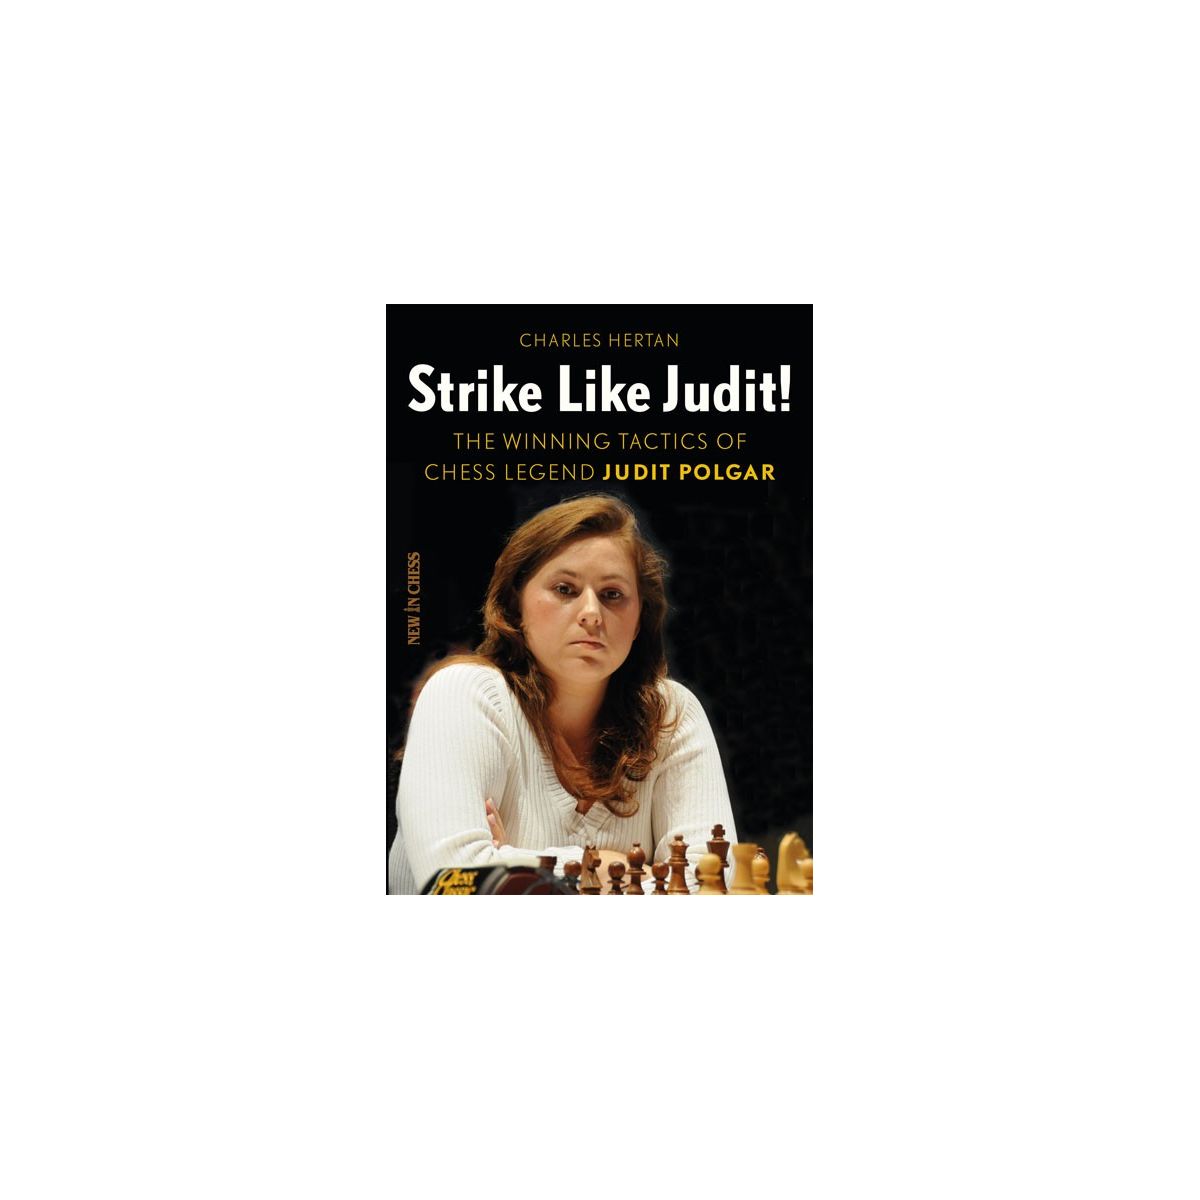 STRIKE LIKE JUDIT Hertan The Winning Tactics Of Chess Legend Judit Polgar